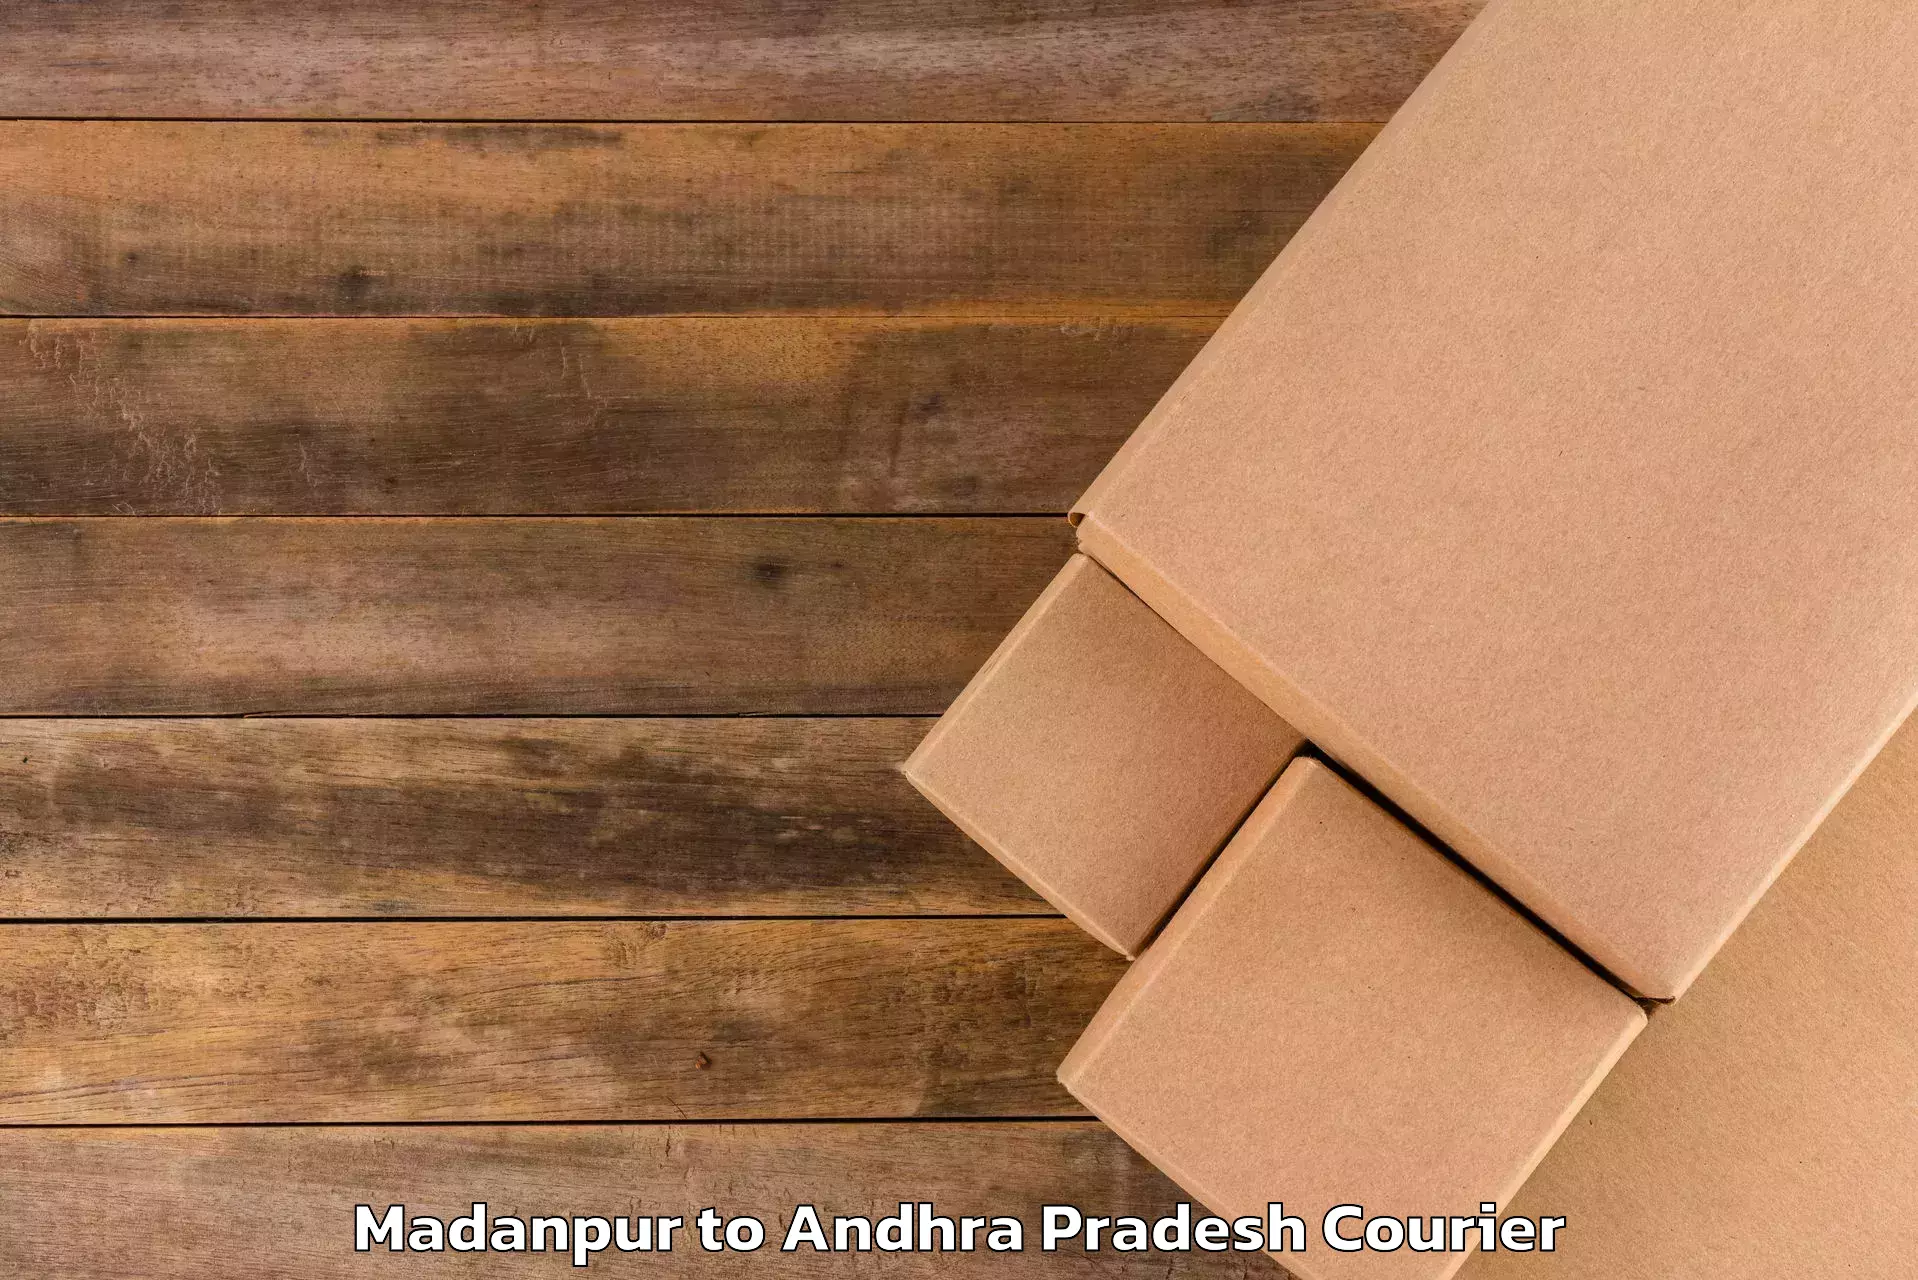 Luggage delivery app Madanpur to Galiveedu